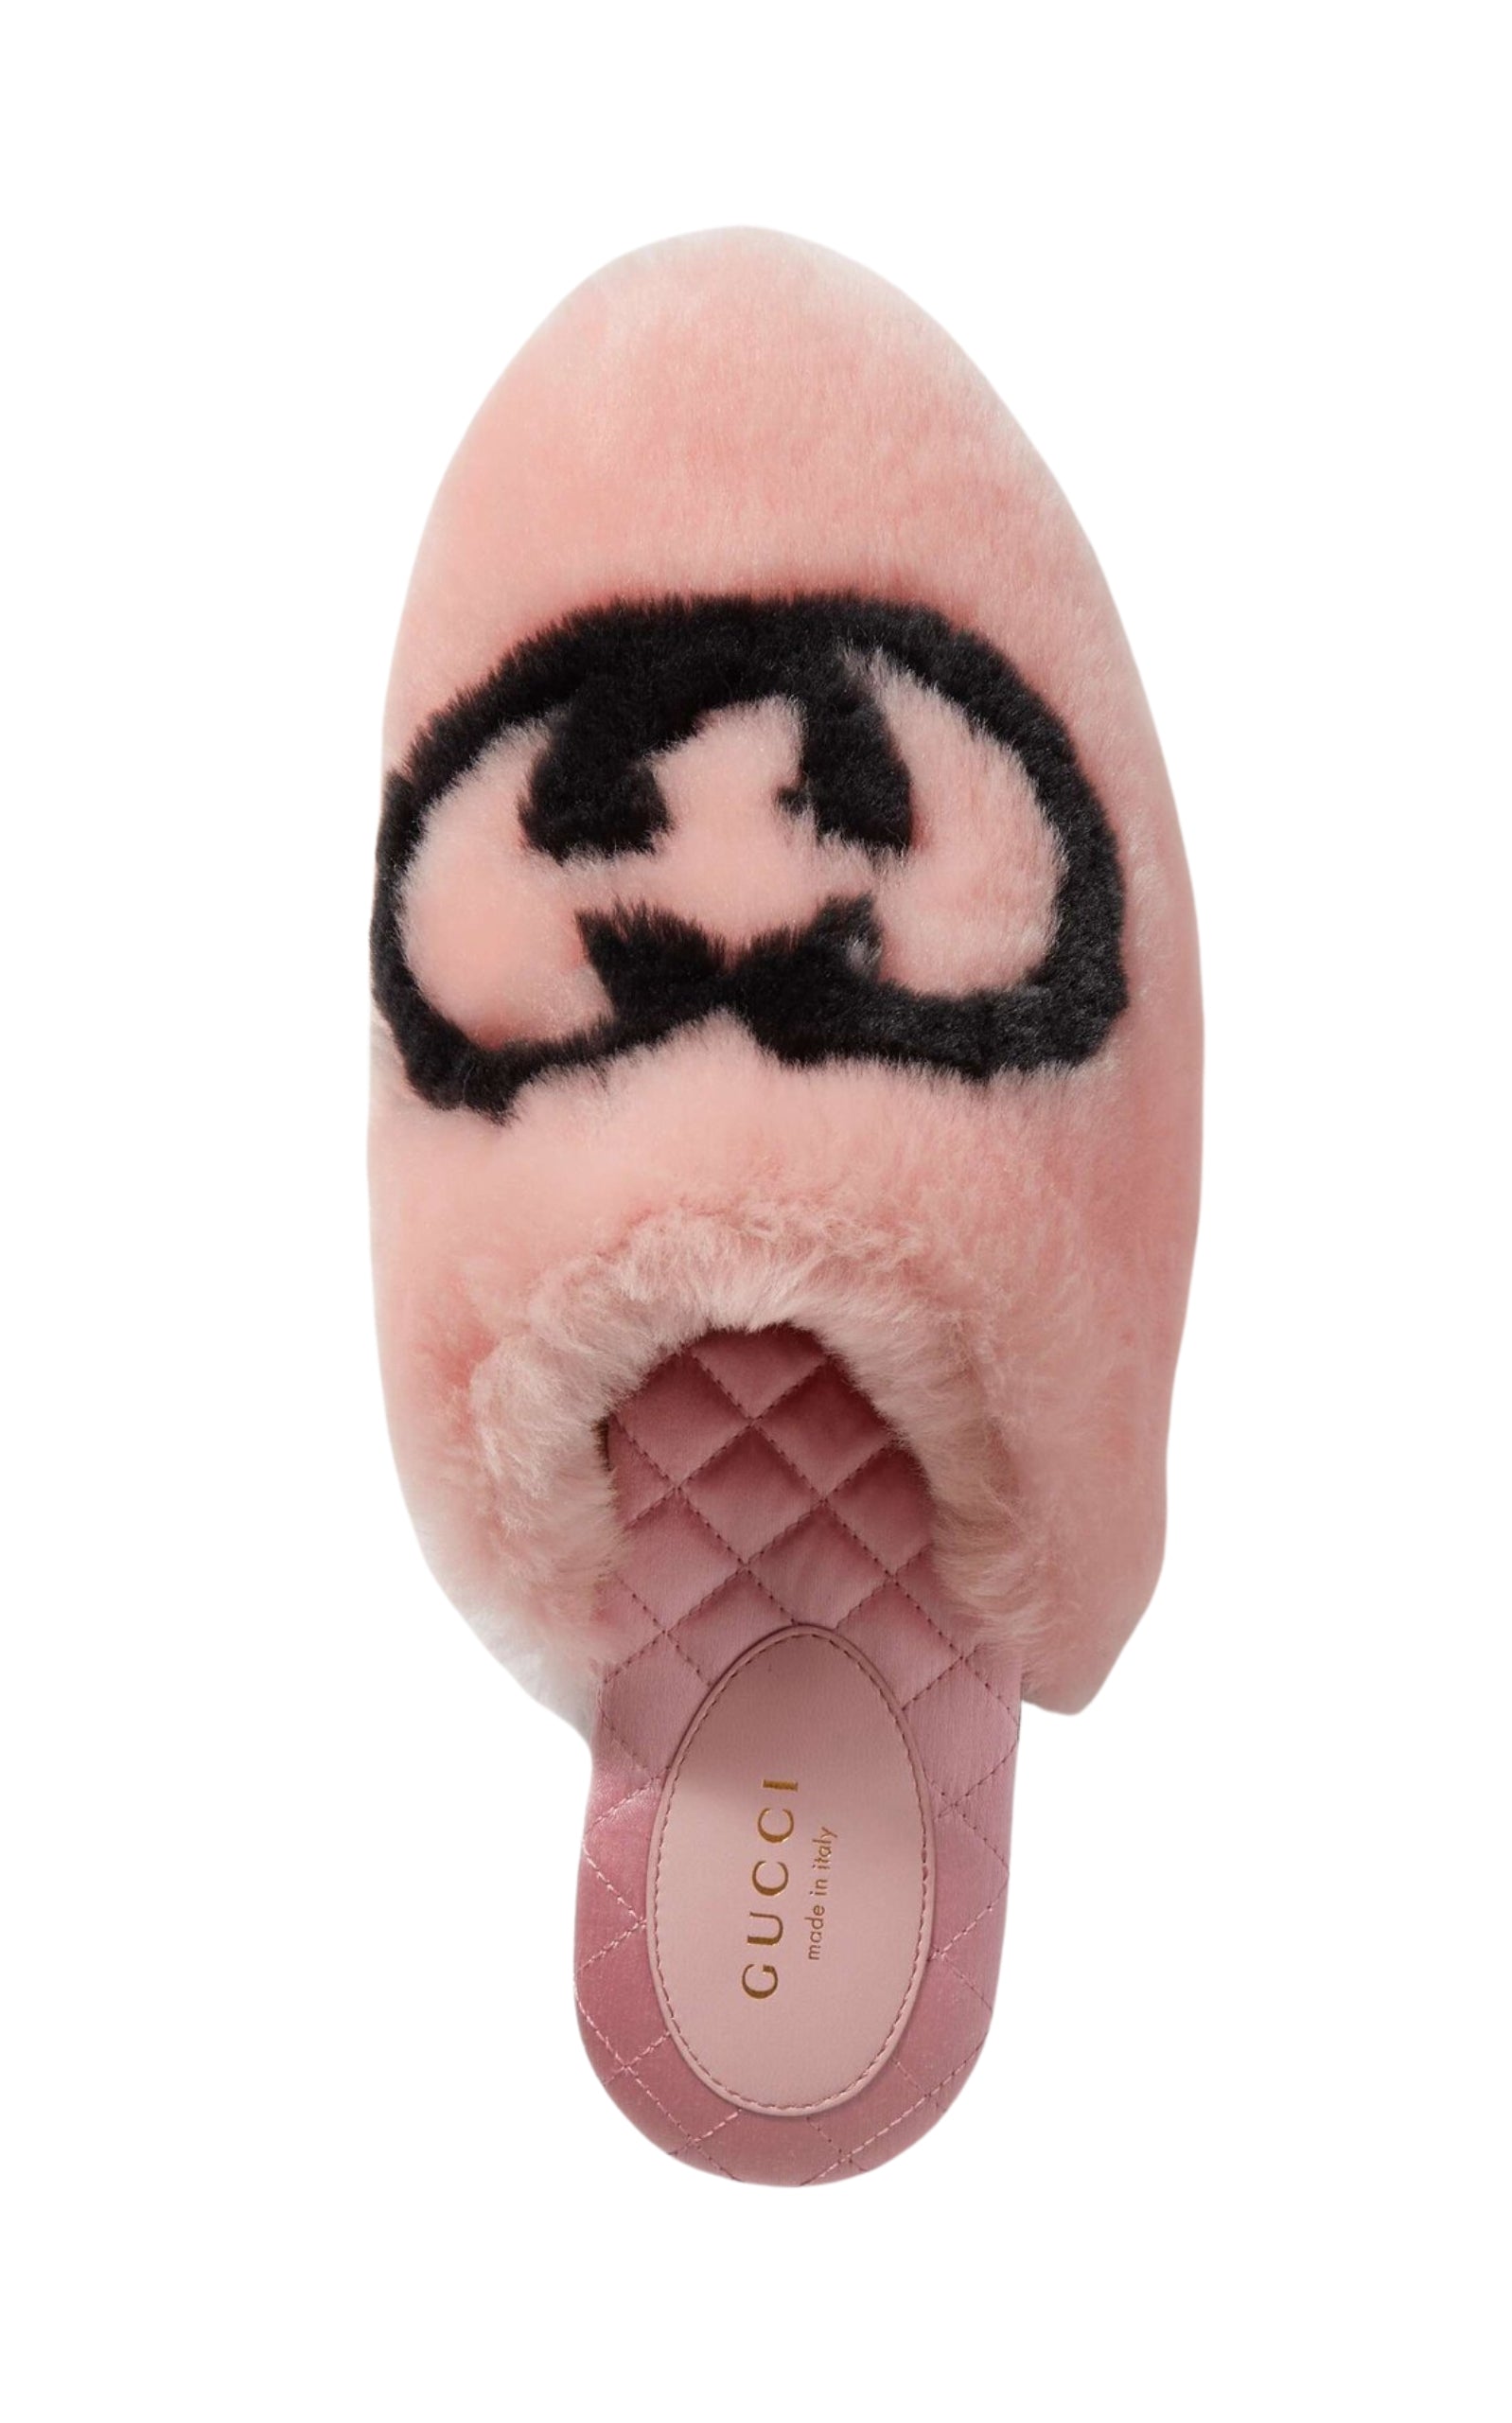 Gucci Interlocking G Faux Fur Slippers in Pink - Runway Catalog